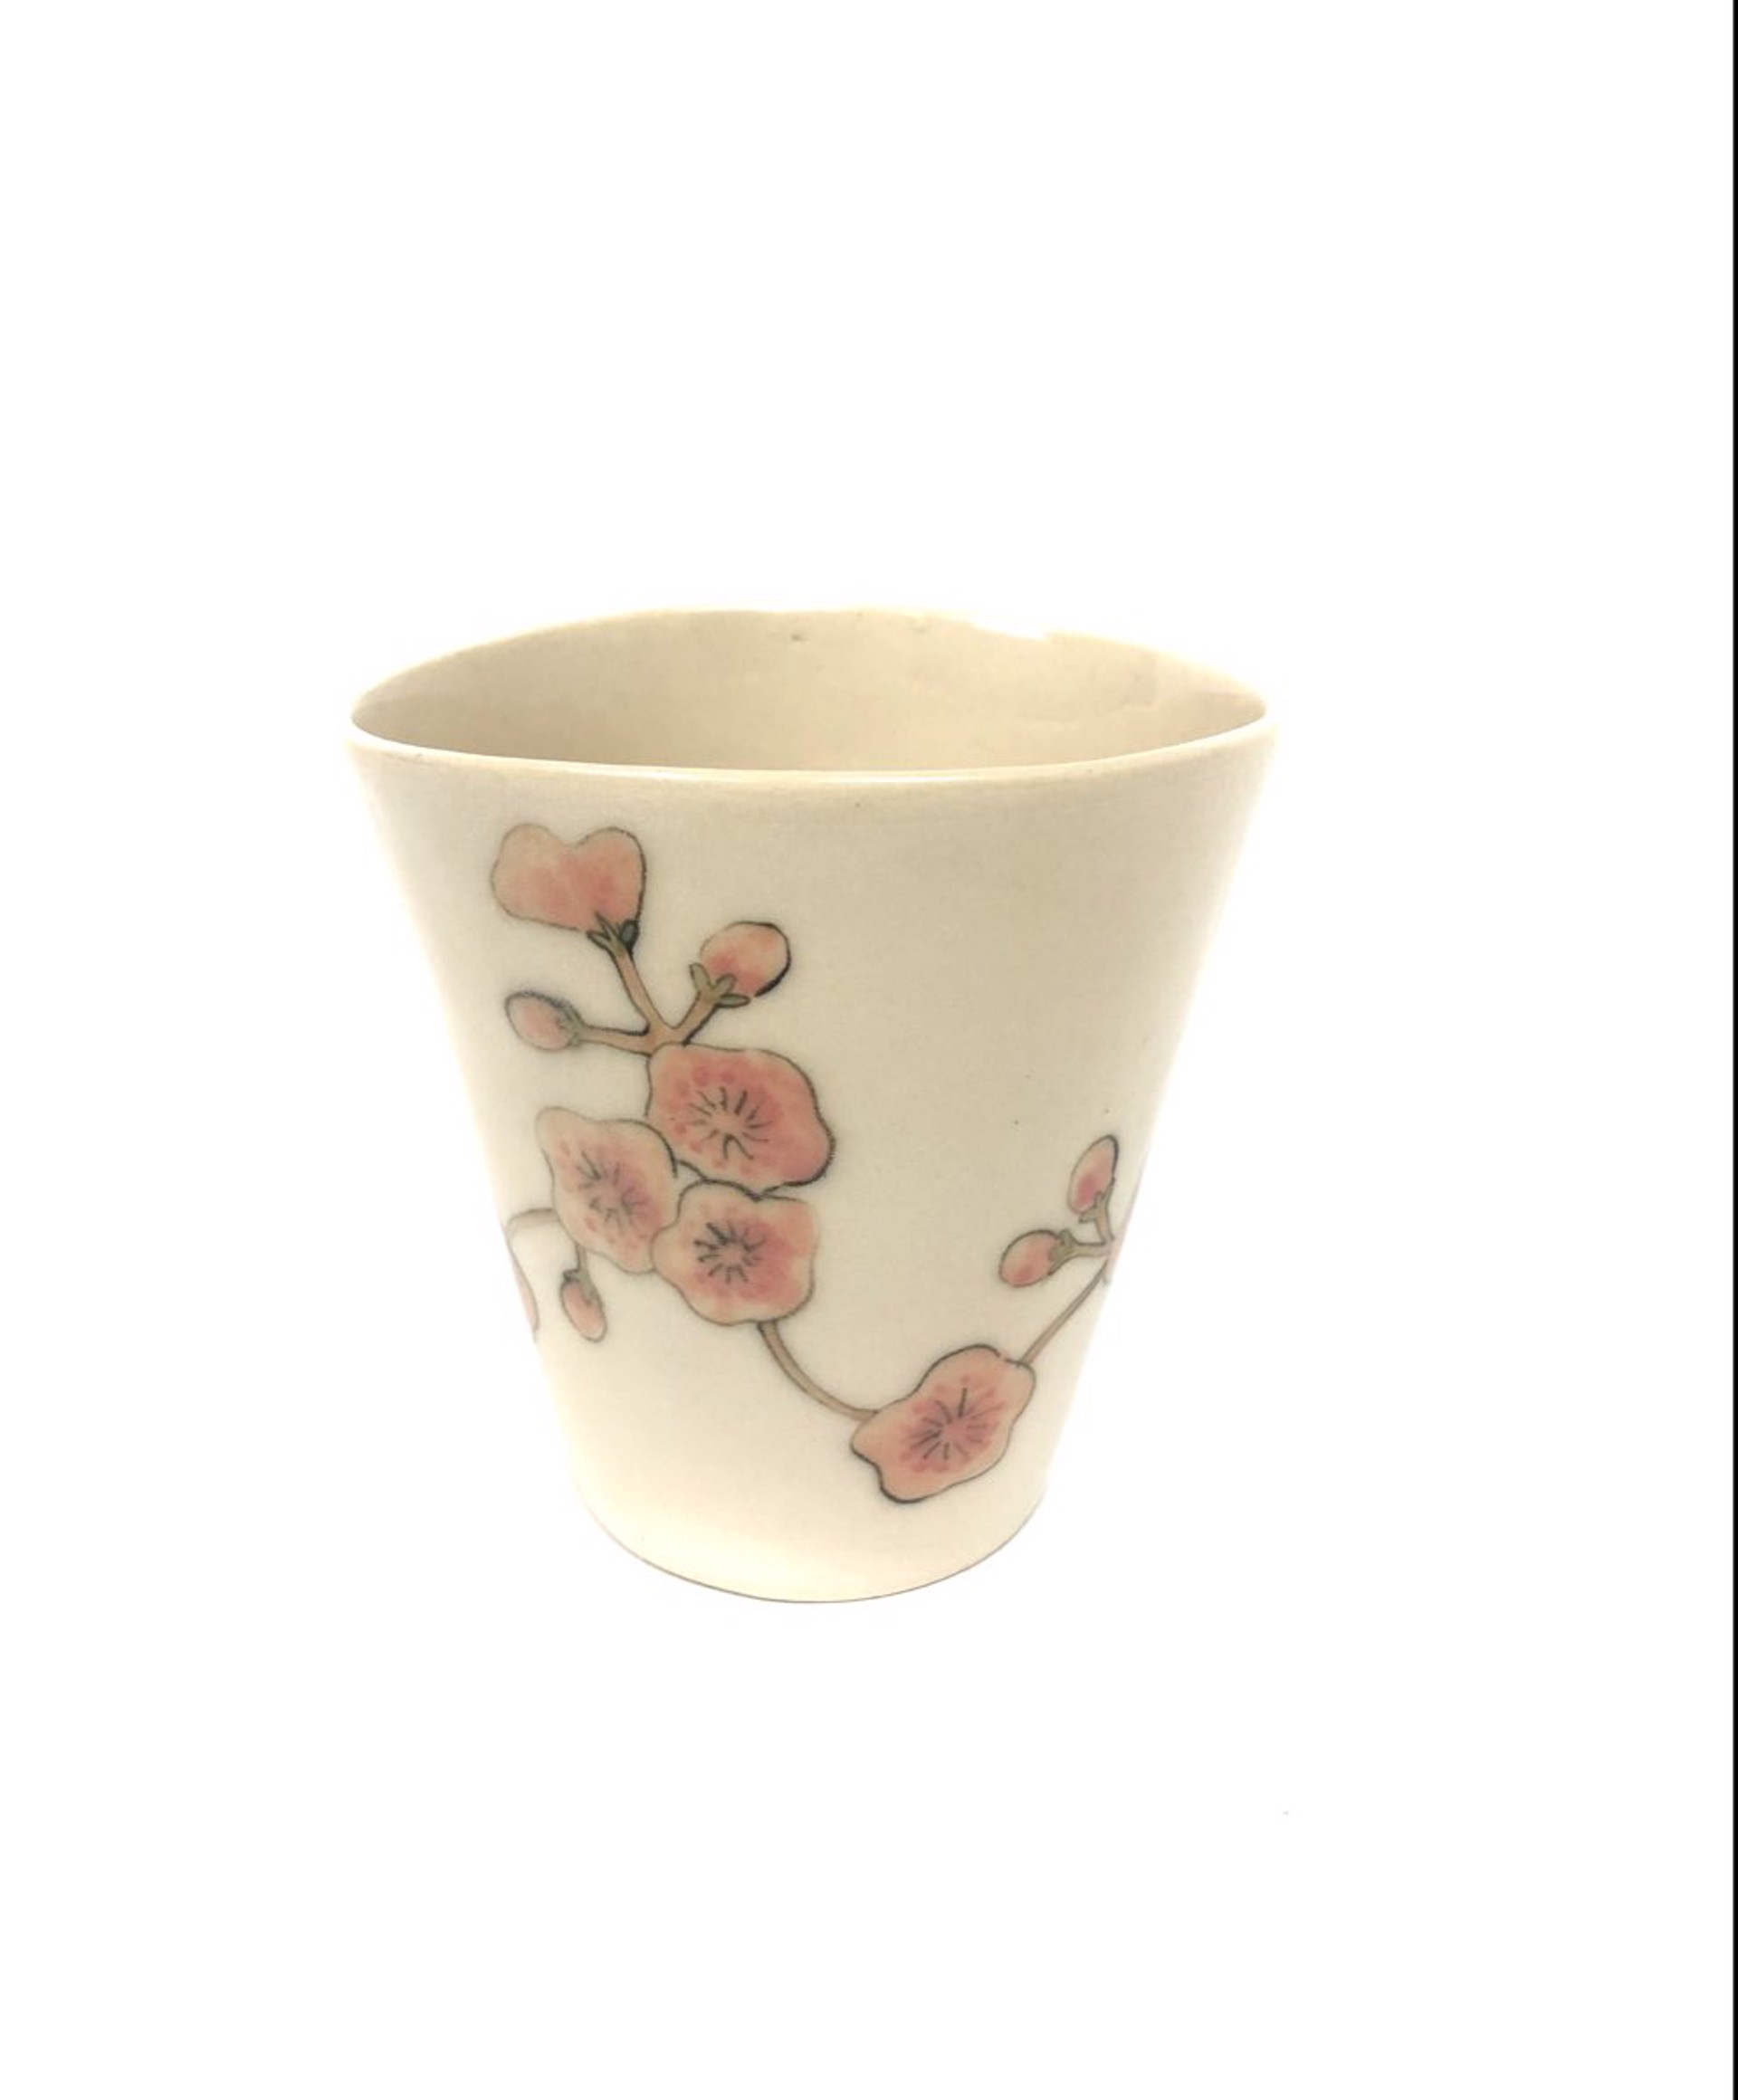 Plum Cup by Mari Kuroda